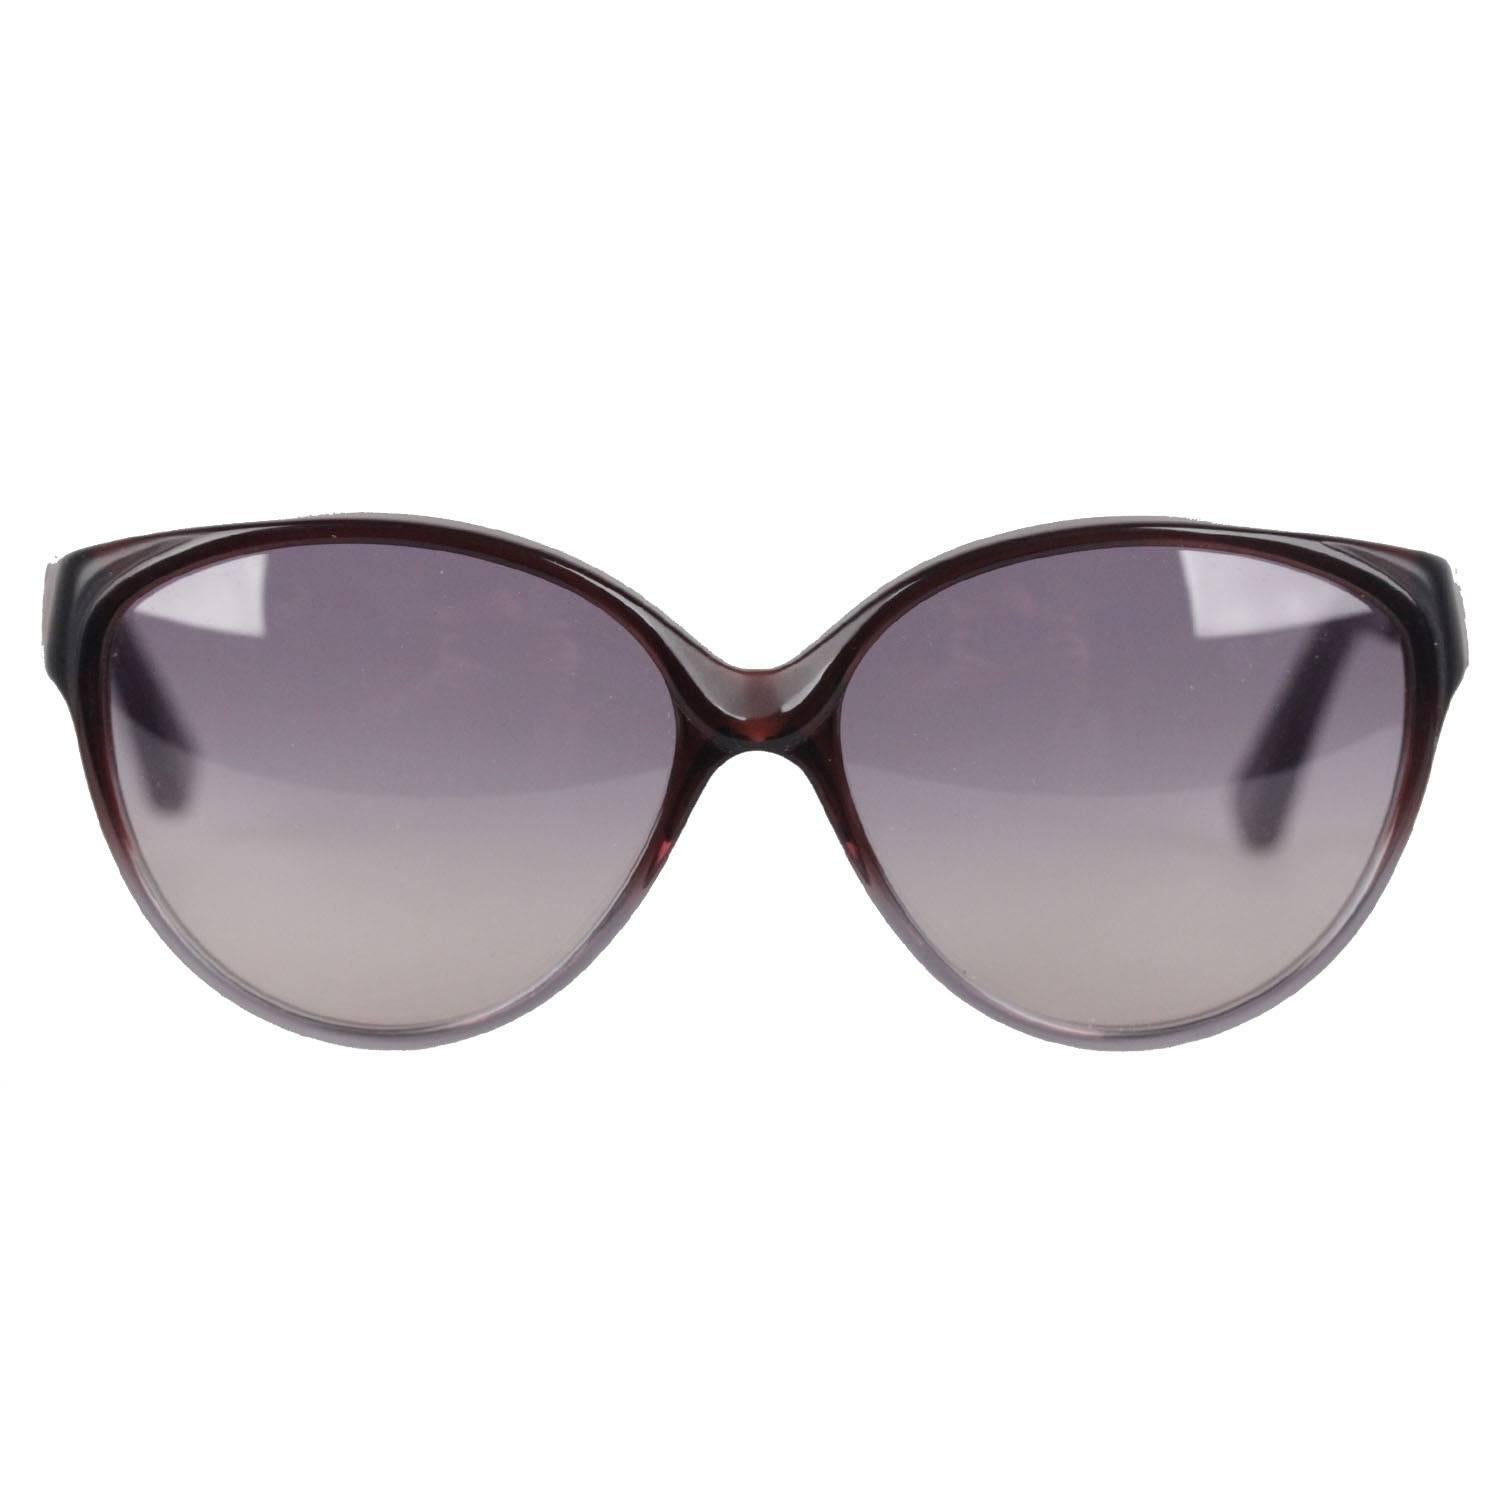 YVES SAINT LAURENT Sunglasses YSL 6336/S 60mm 130 NEW, MINT & BOXED